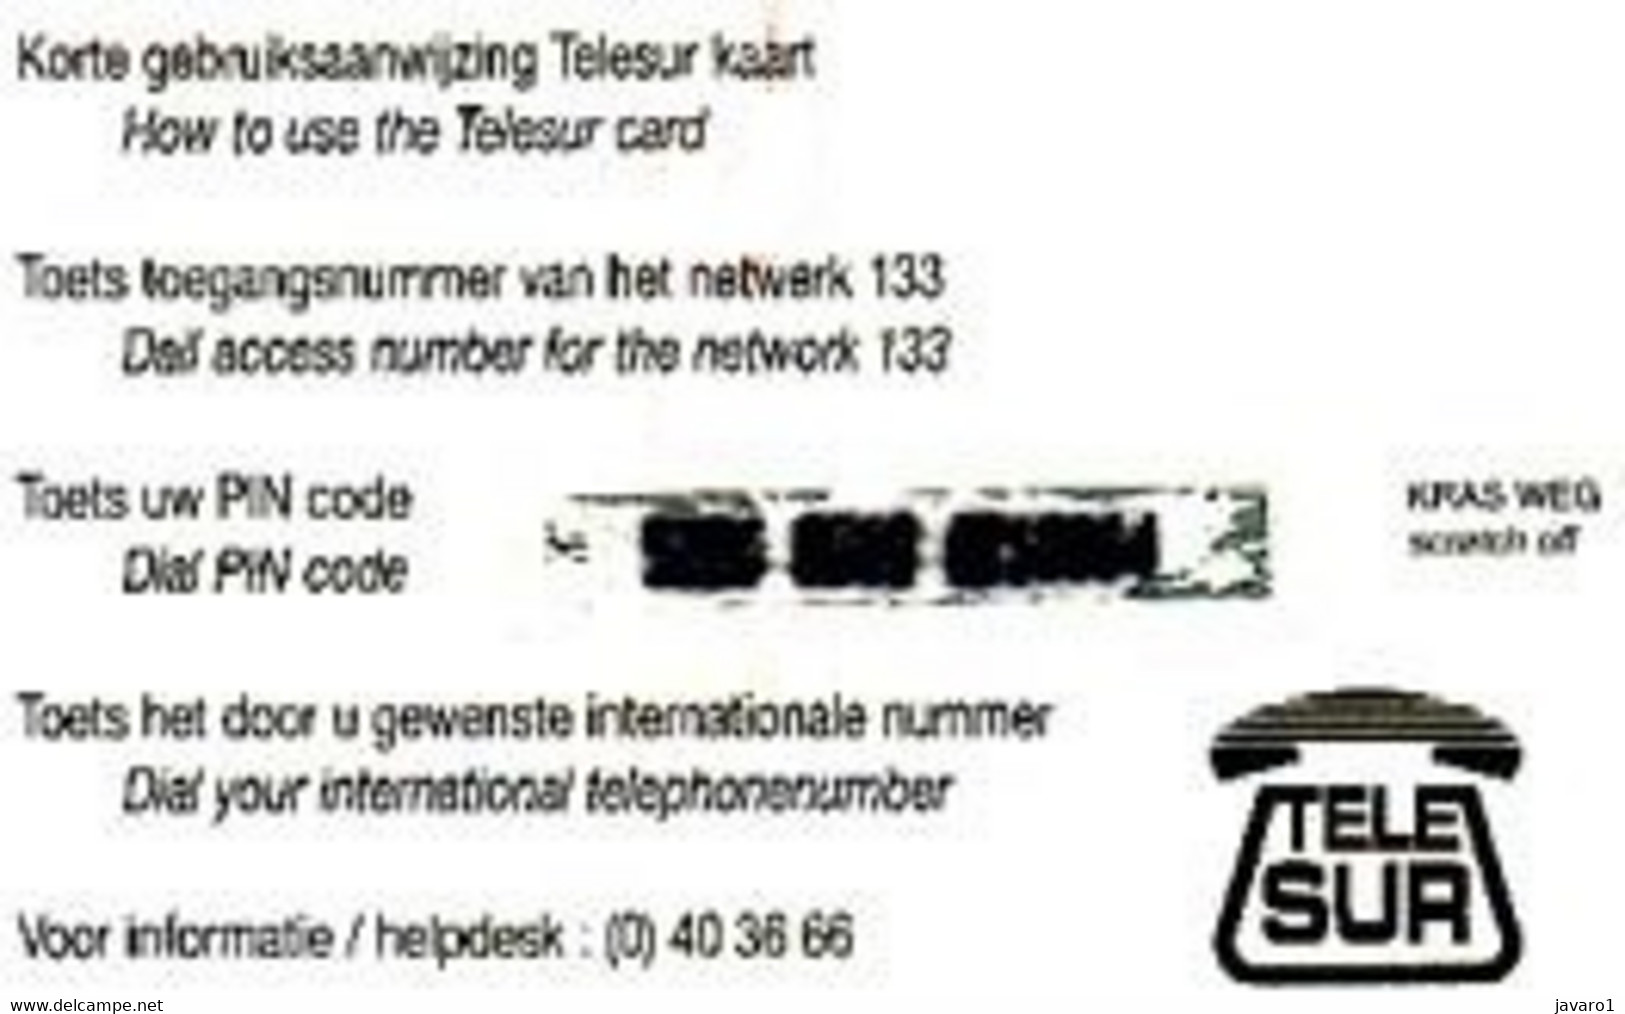 SURINAME : SUR06 3$ Green TELESUR TELEPHONE CARD USED - Suriname